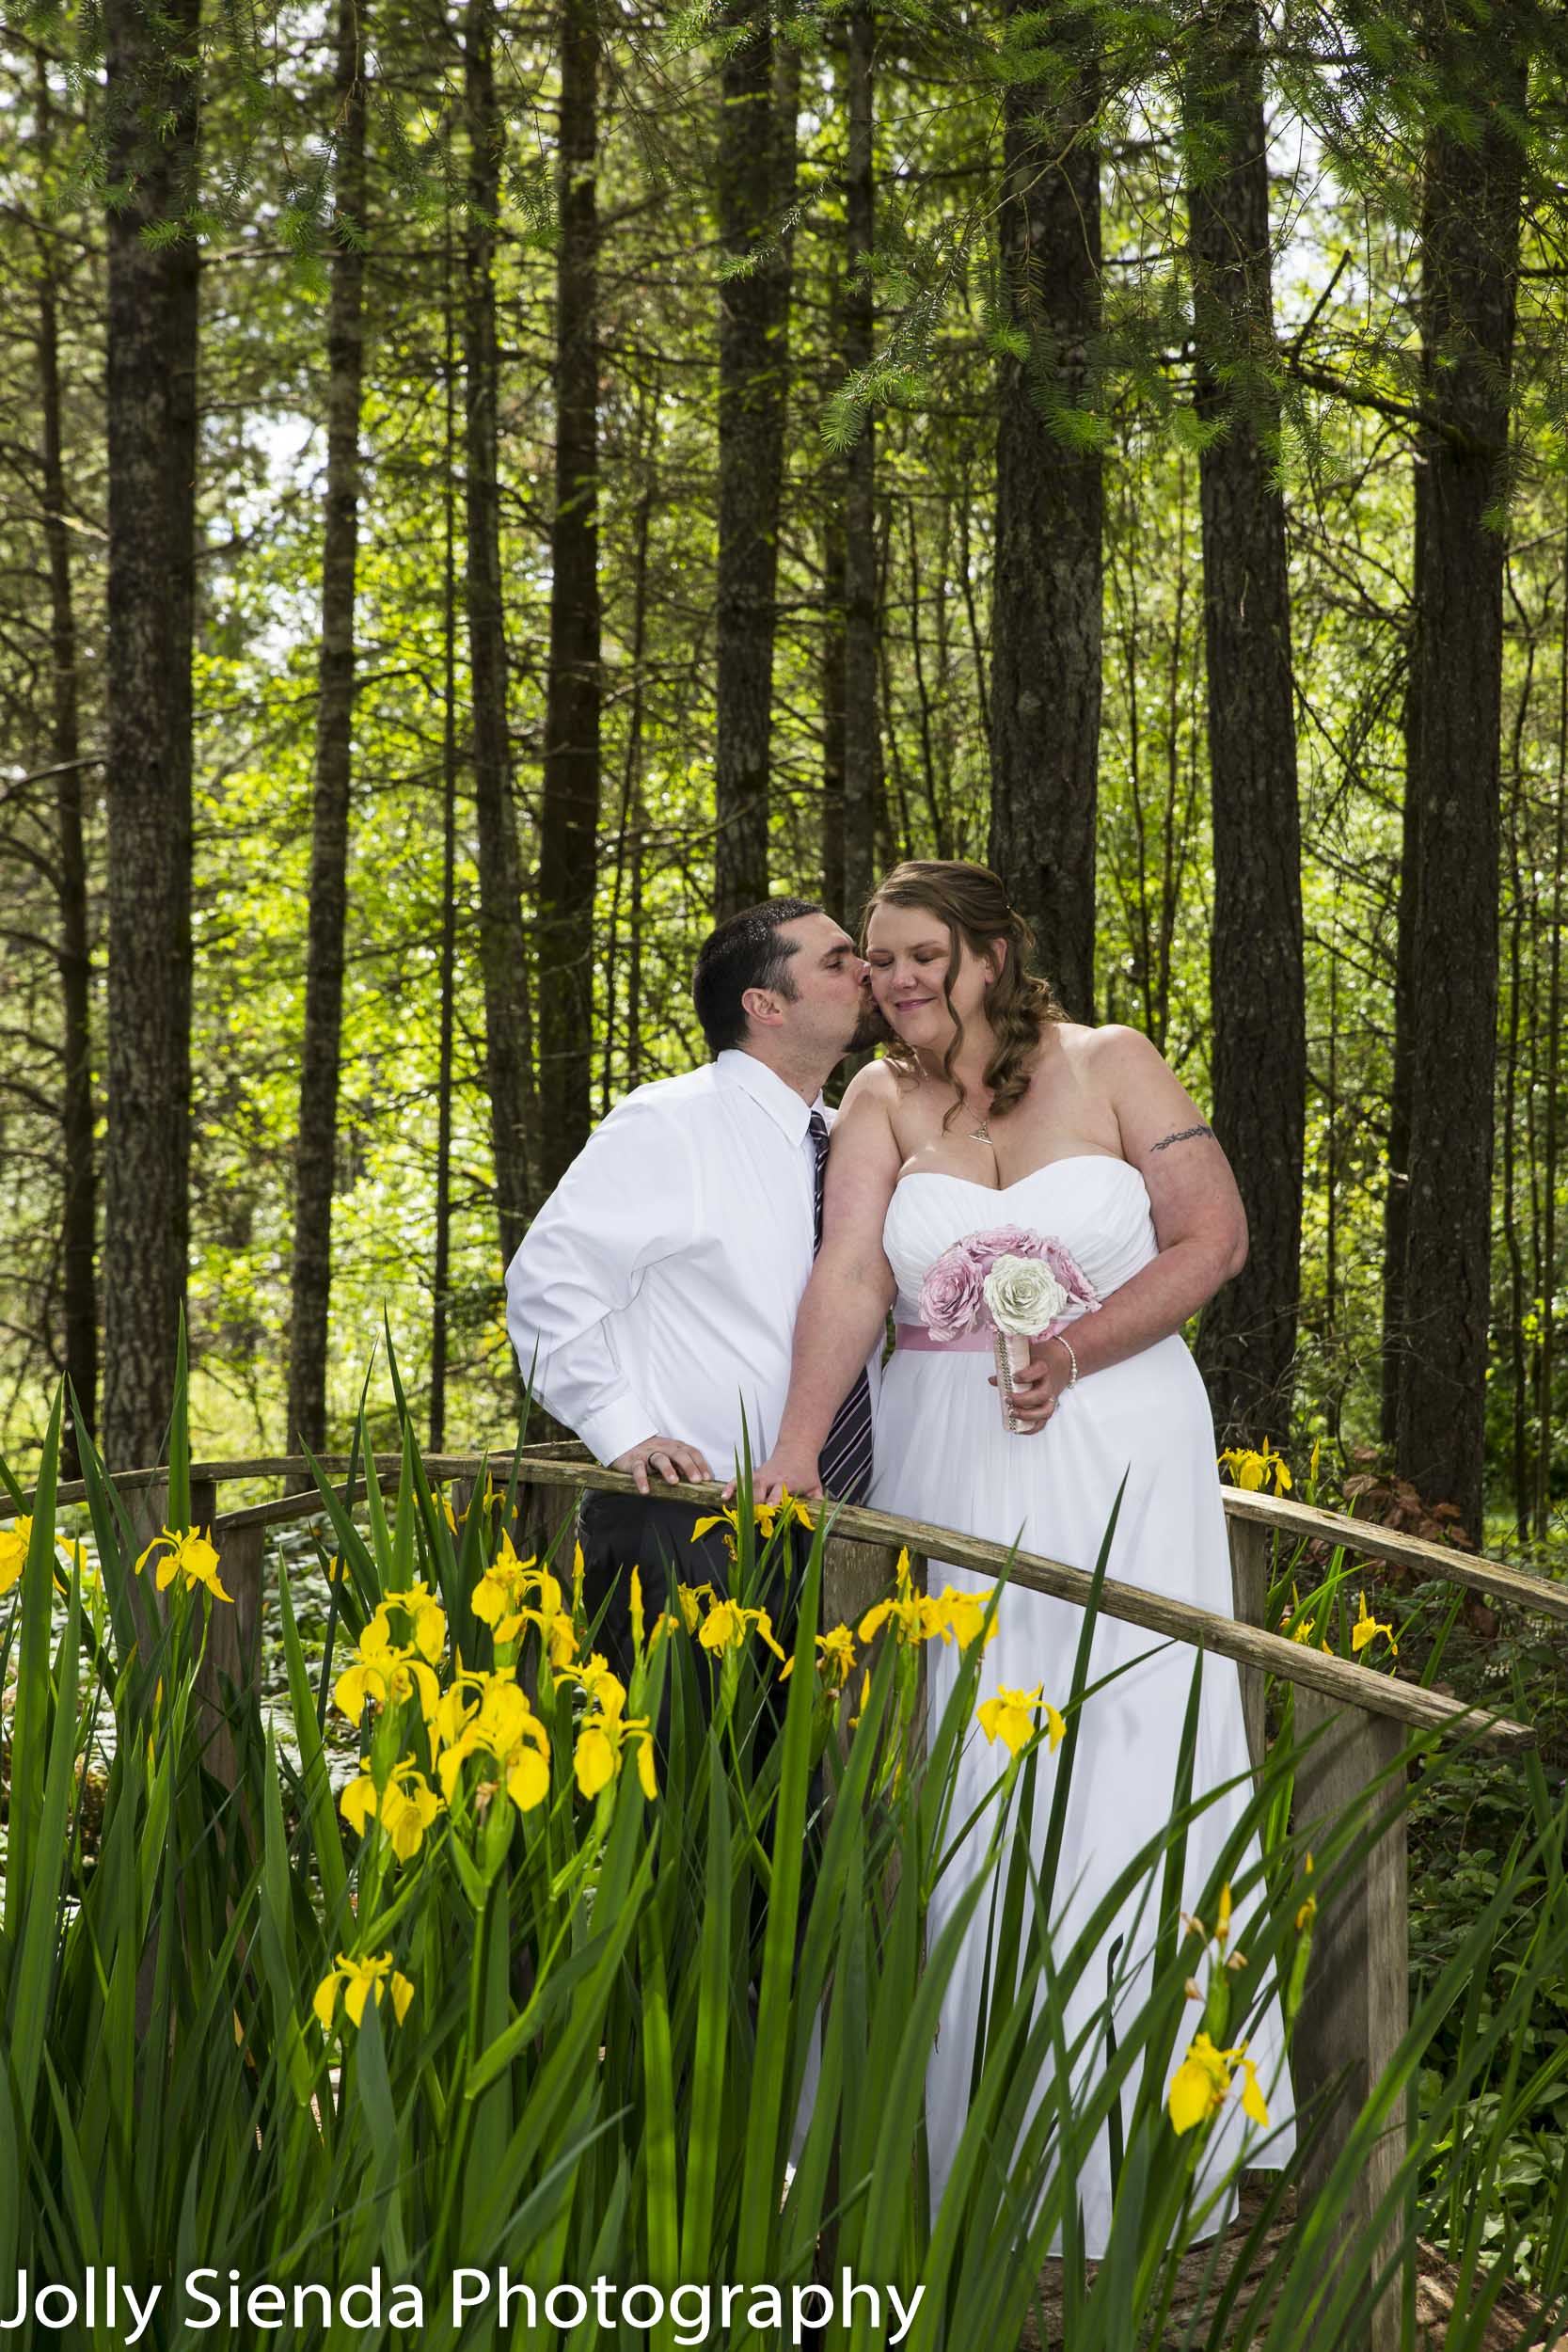 Bride and groom outdoor portrait wedding photography